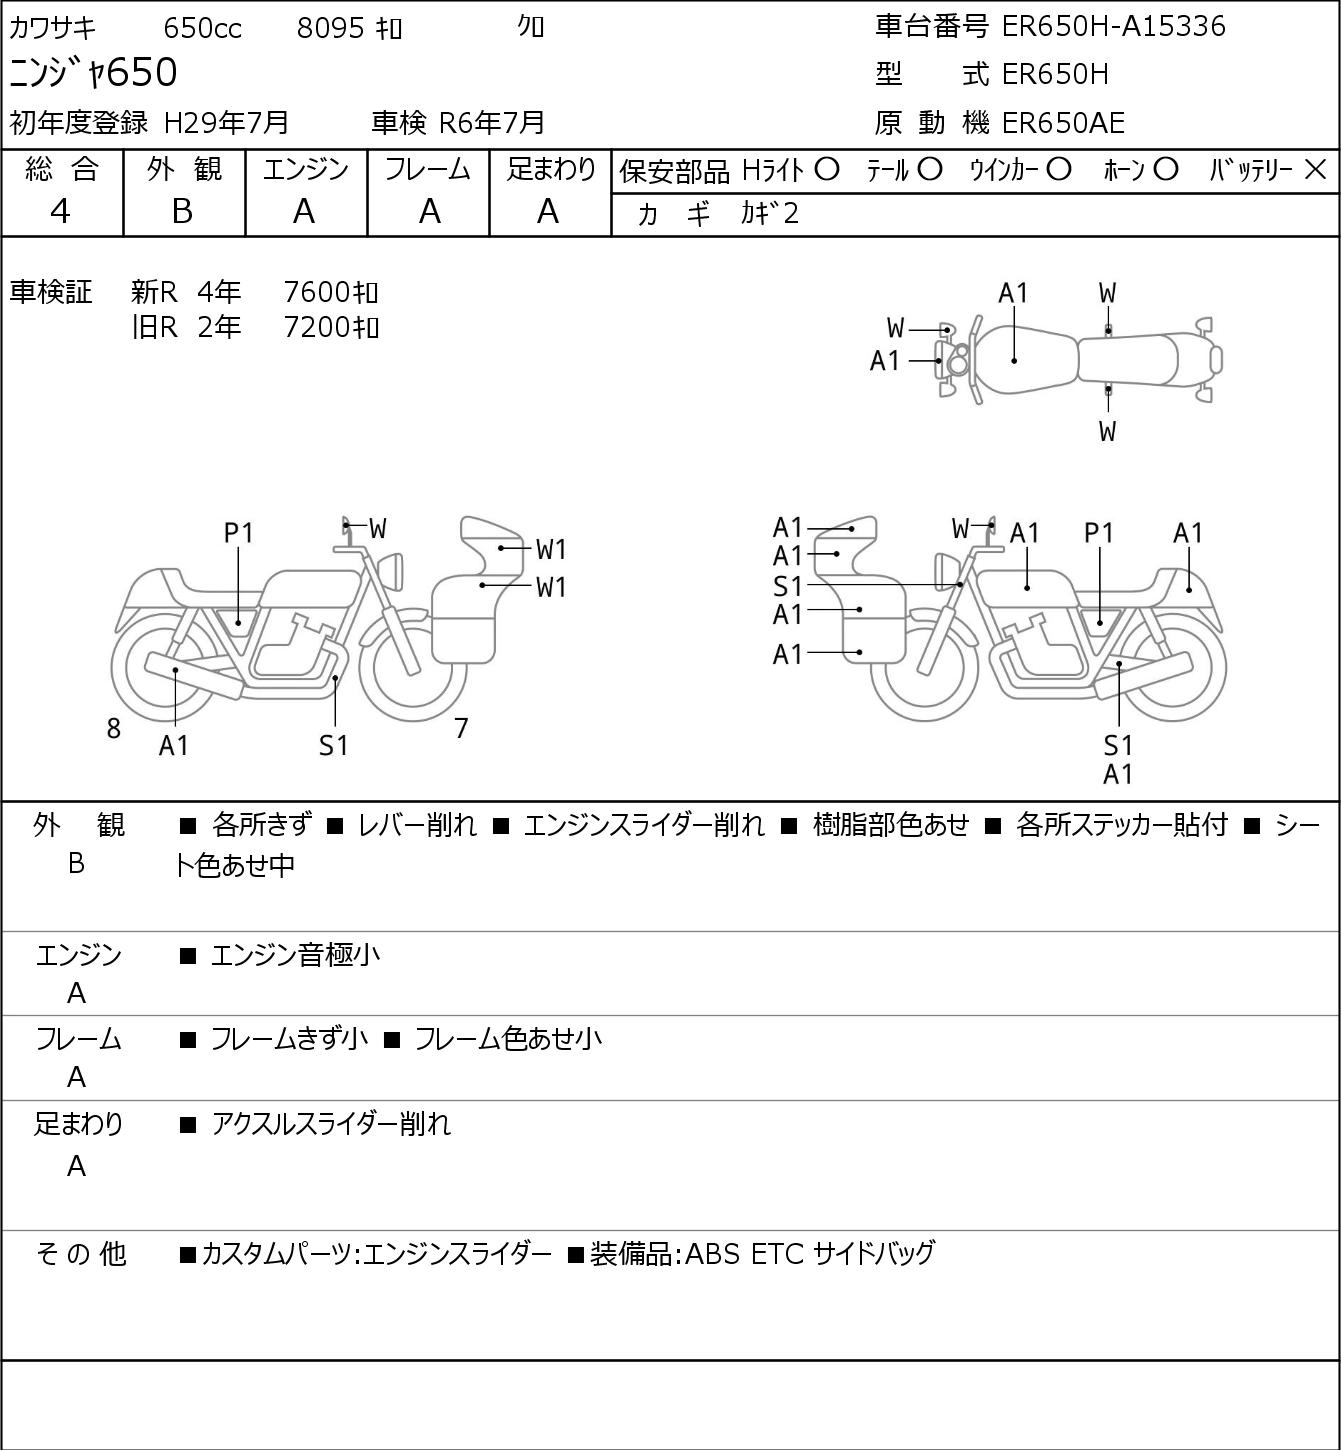 Kawasaki NINJA 650 ER650H - купить недорого